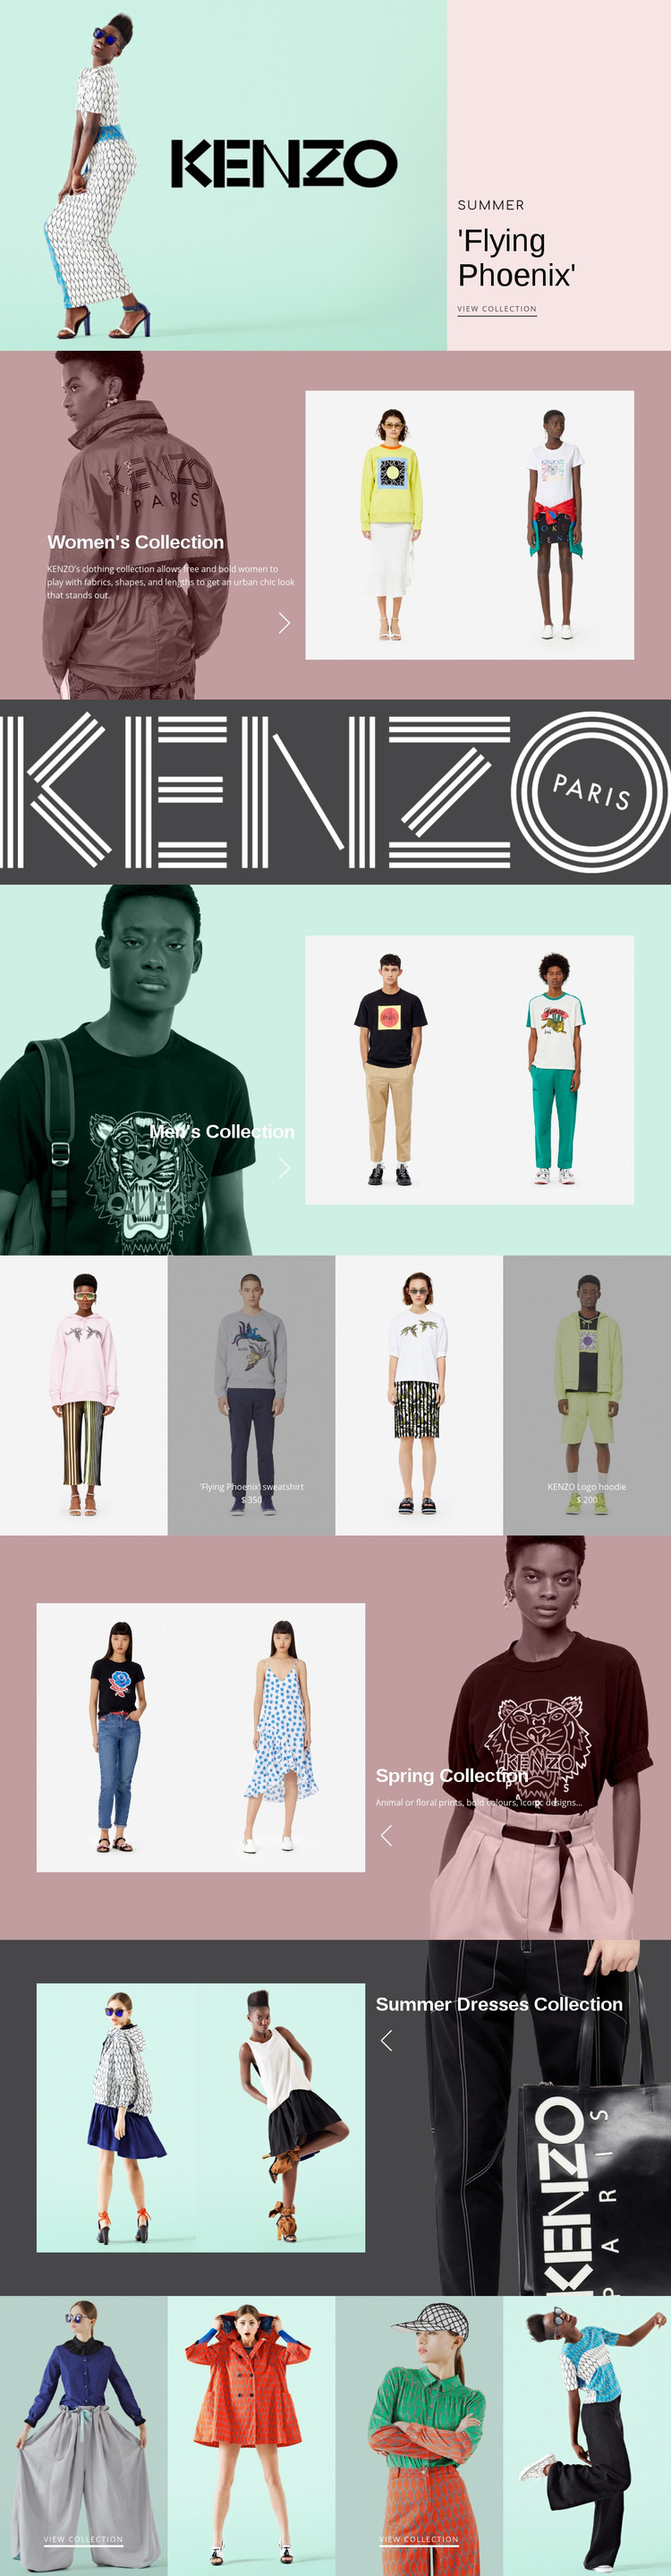 Atelier of modern fashion Homepage Design